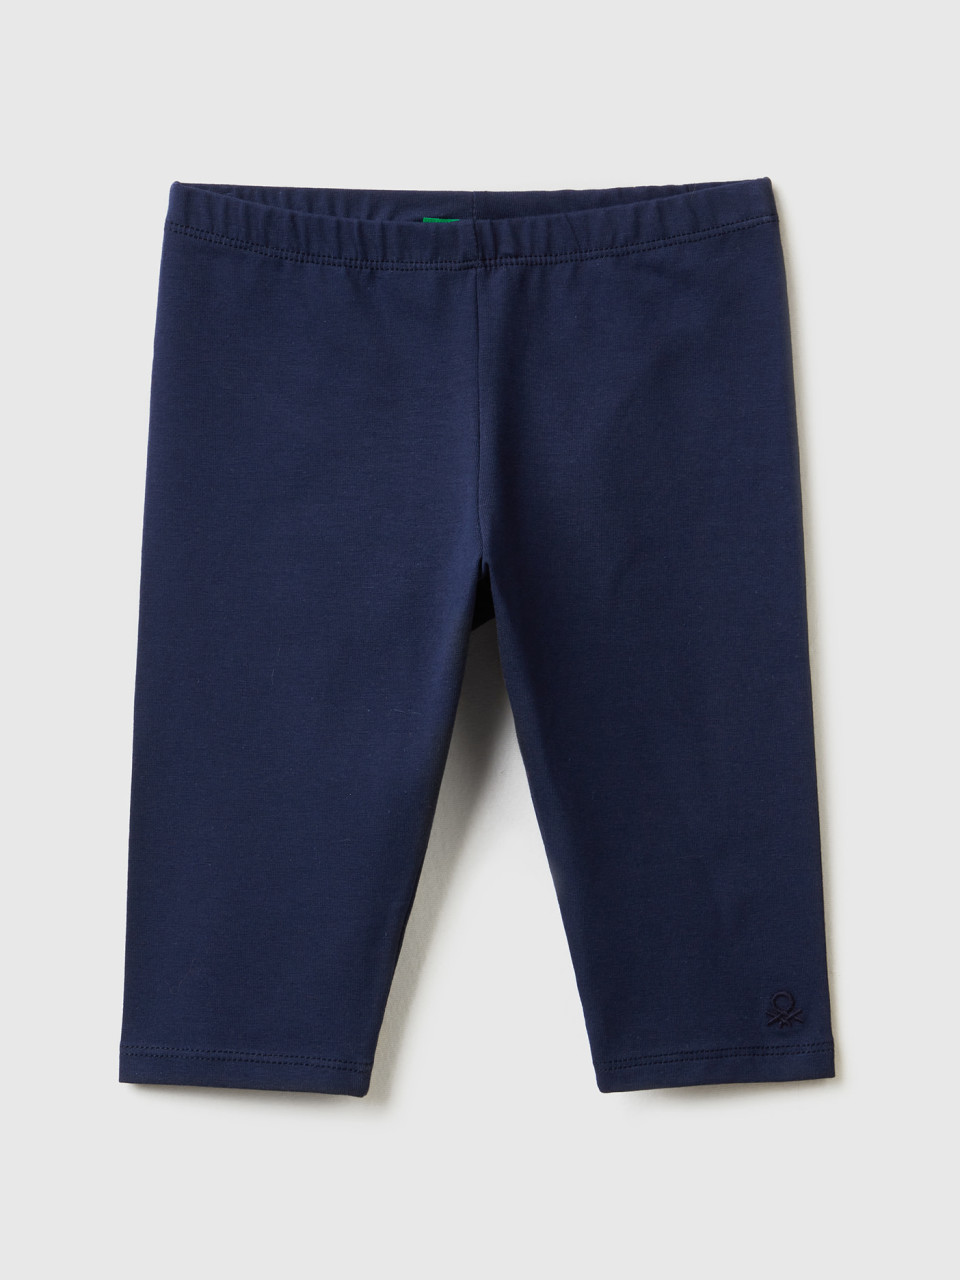 Benetton, 3/4 Leggings In Stretch Cotton, Dark Blue, Kids